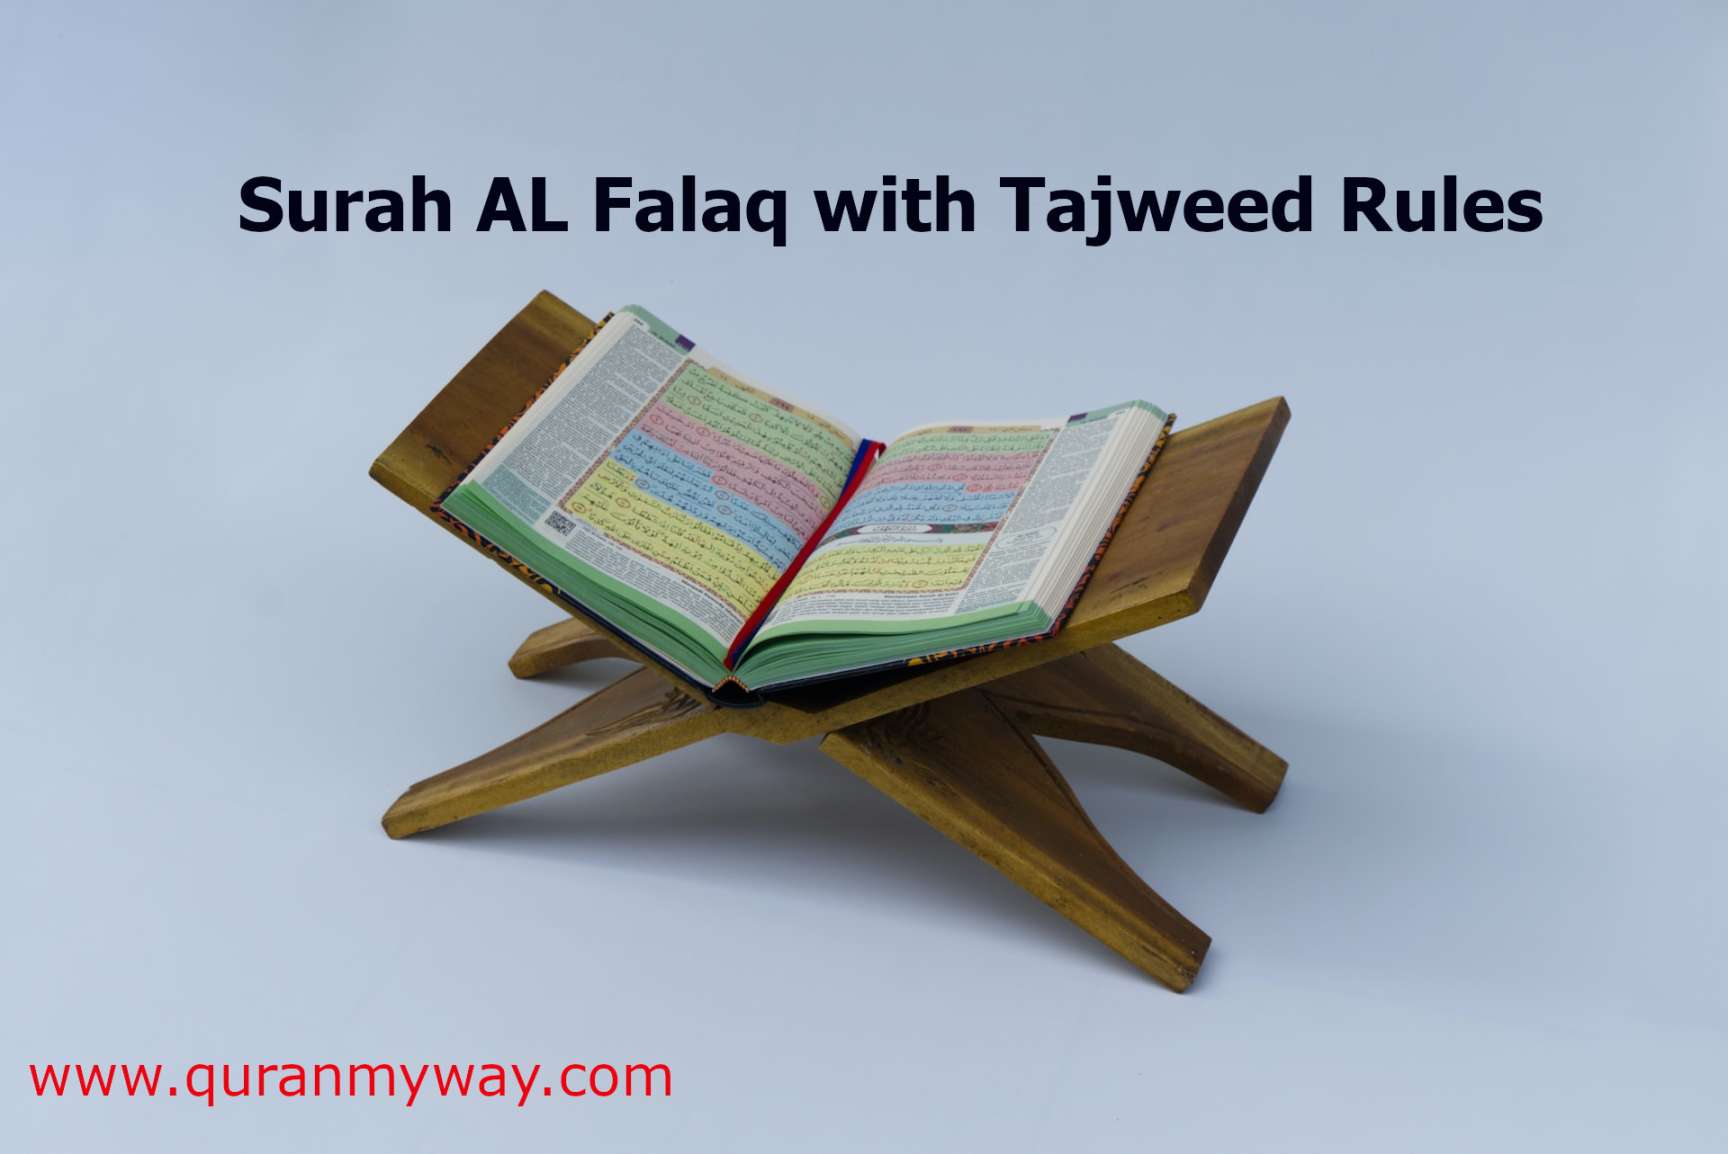 Surah AL Falaq with Tajweed Rules